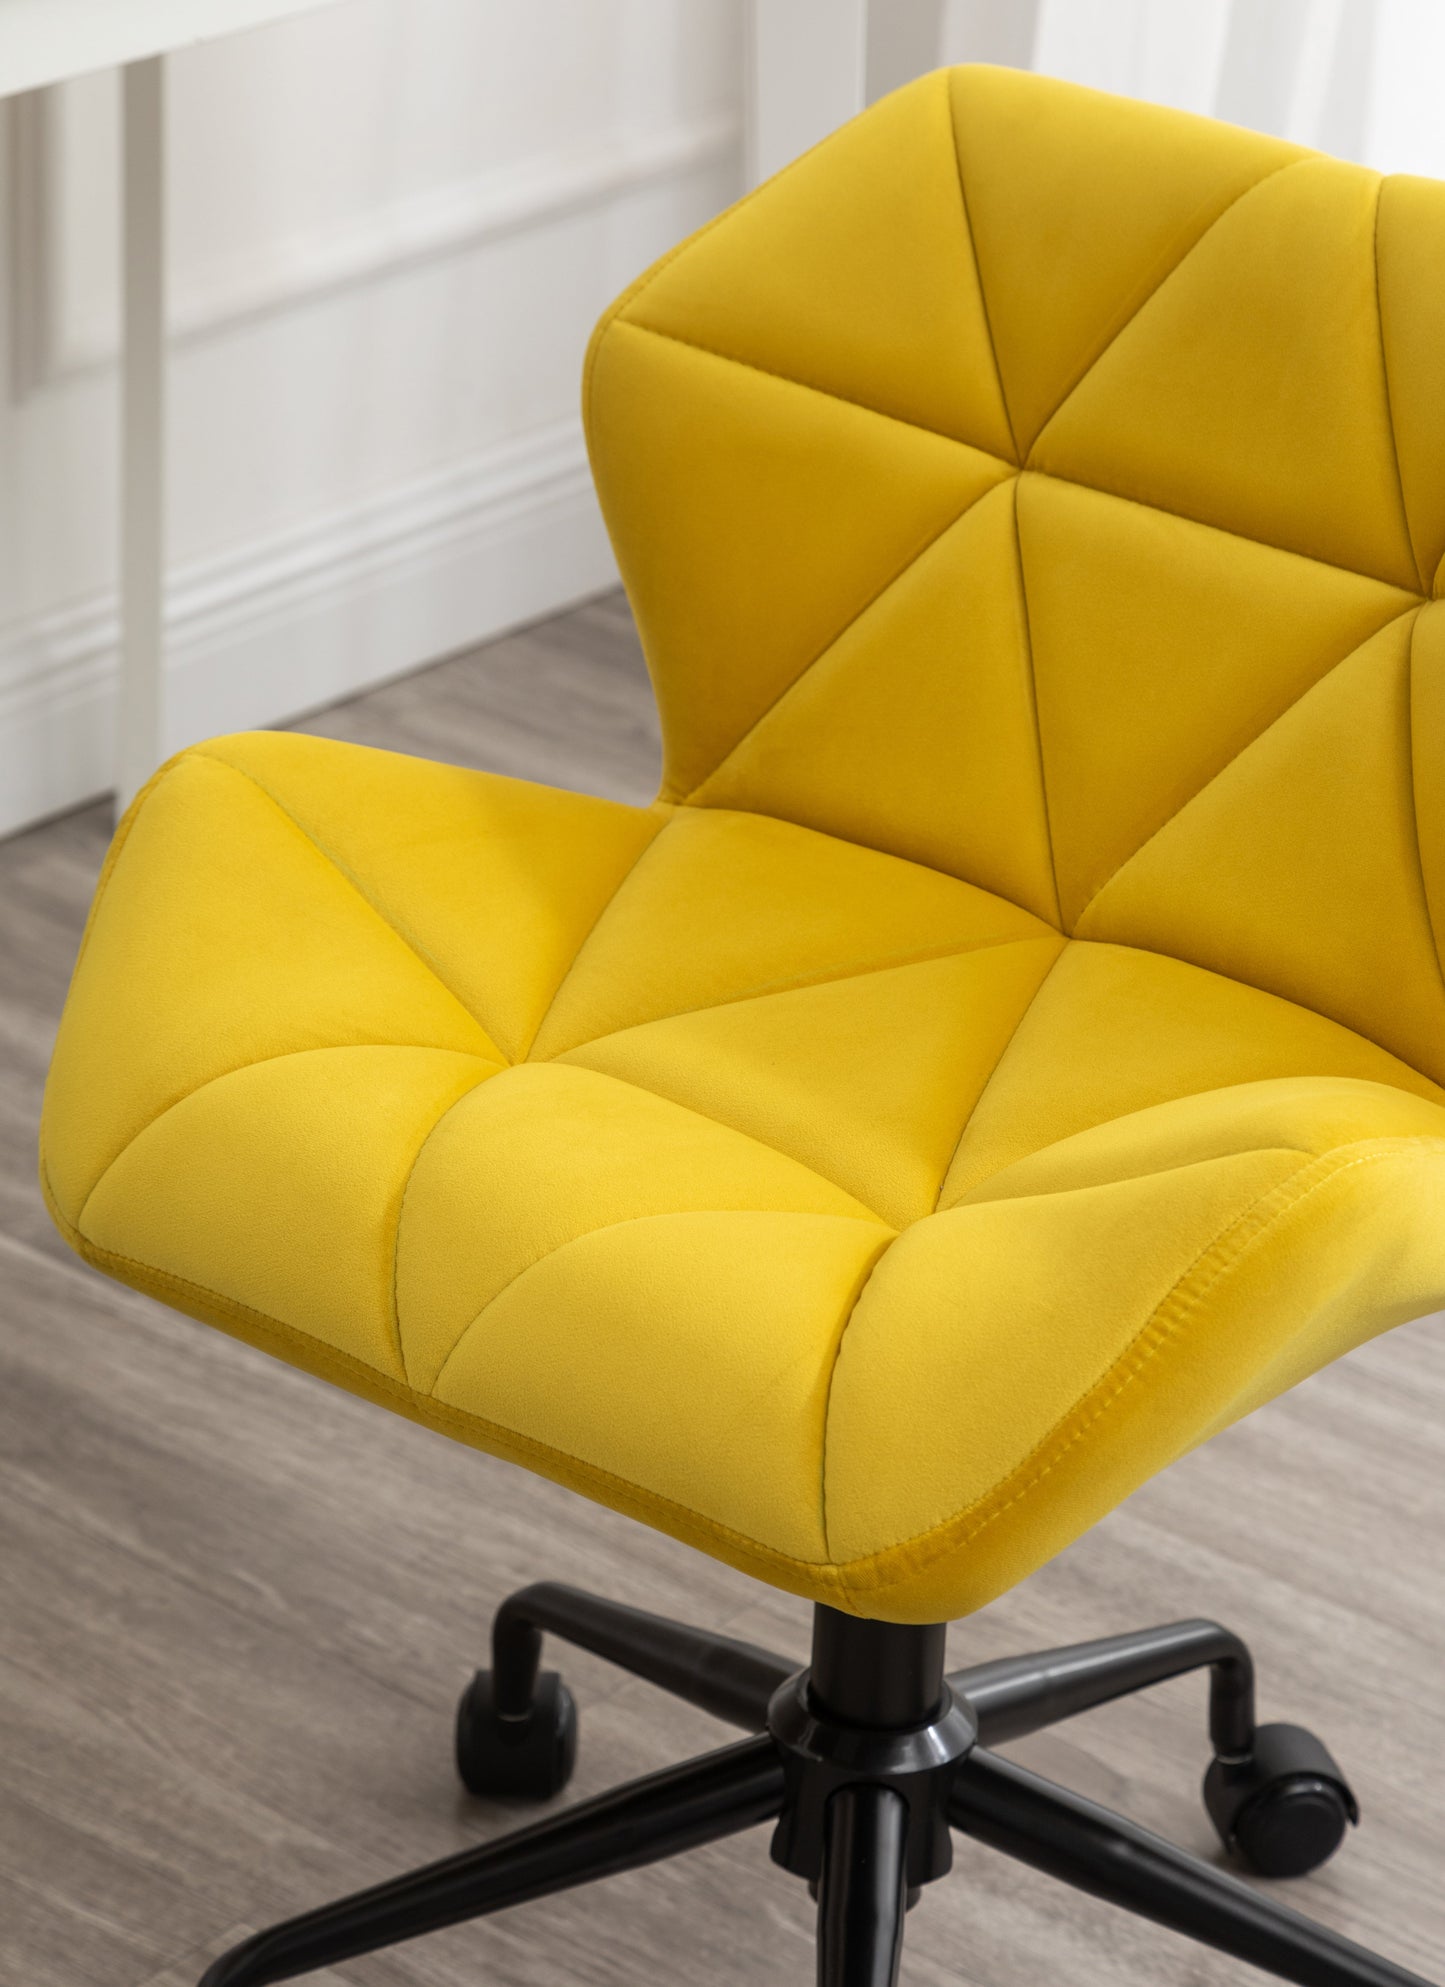 Eldon Diamond Tufted Adjustable Swivel Office Chair, Yellow